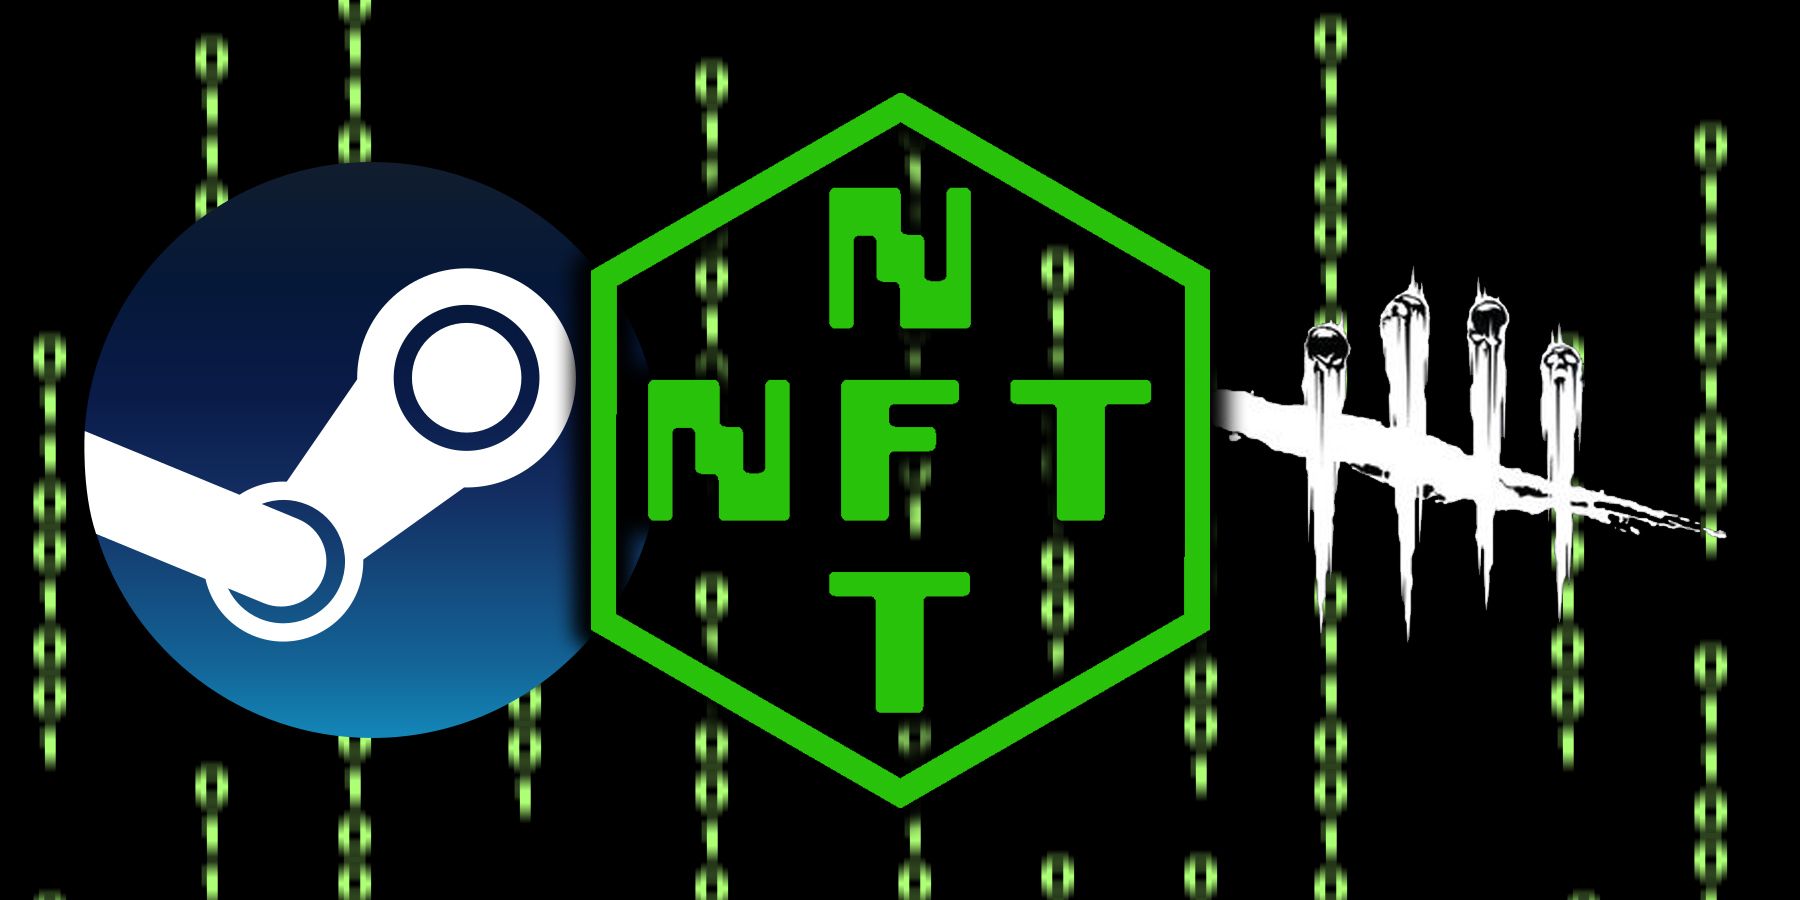 Steam logo alongside the Dead by Daylight logo and an NFT token.